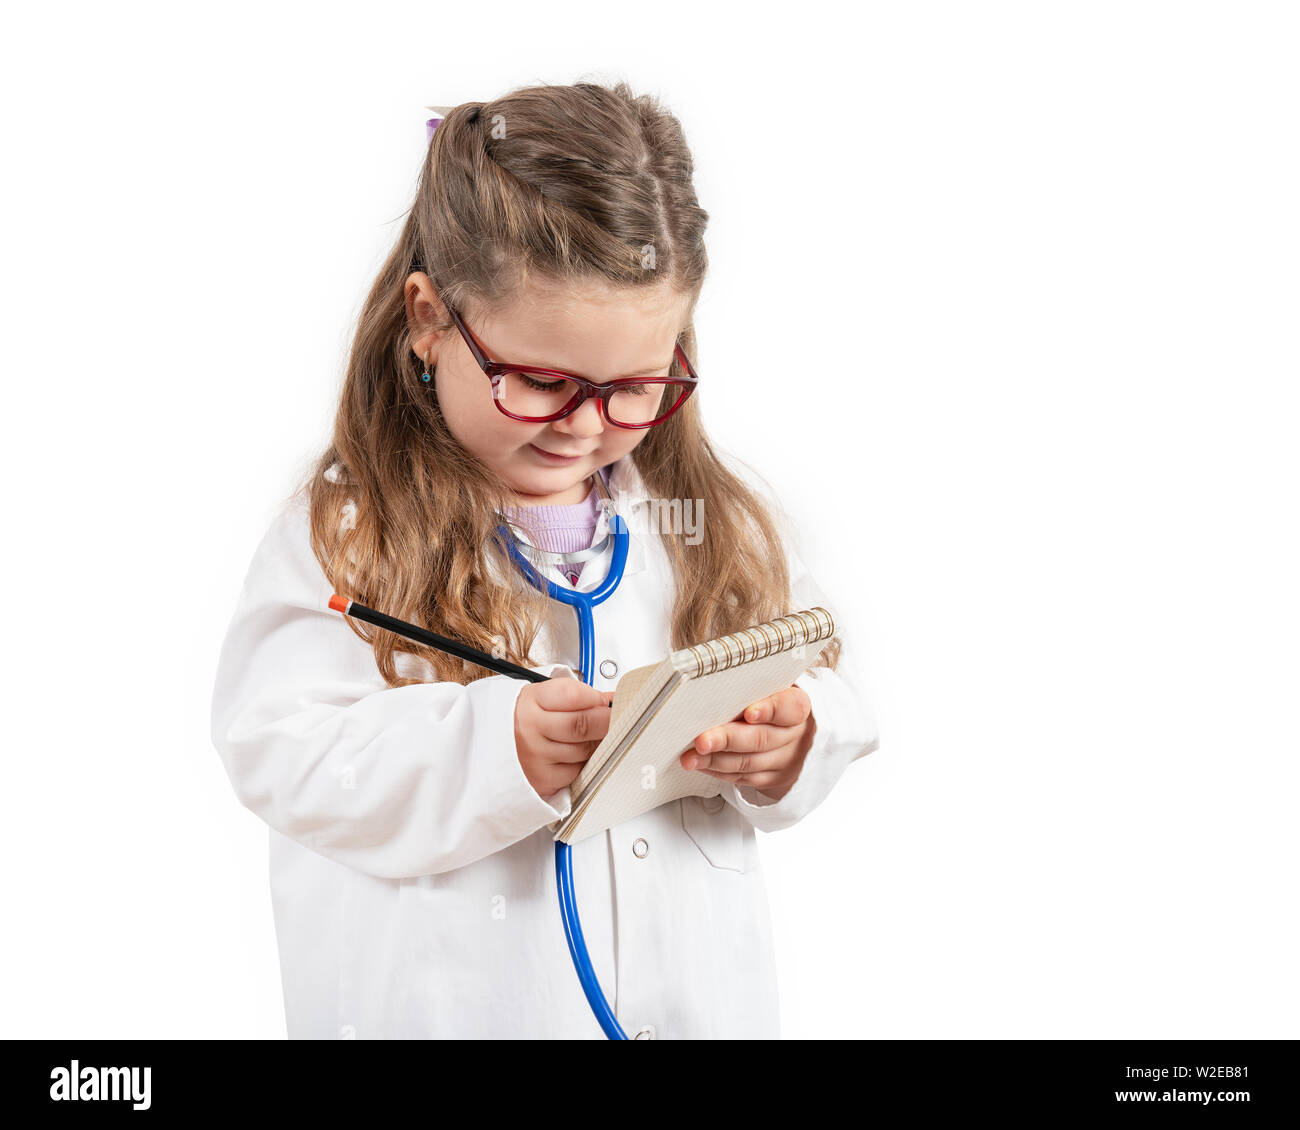 Kleine süße Mädchen in Doktor Kostüm Holding sthetoscope am Schwarzen Brett Stockfoto